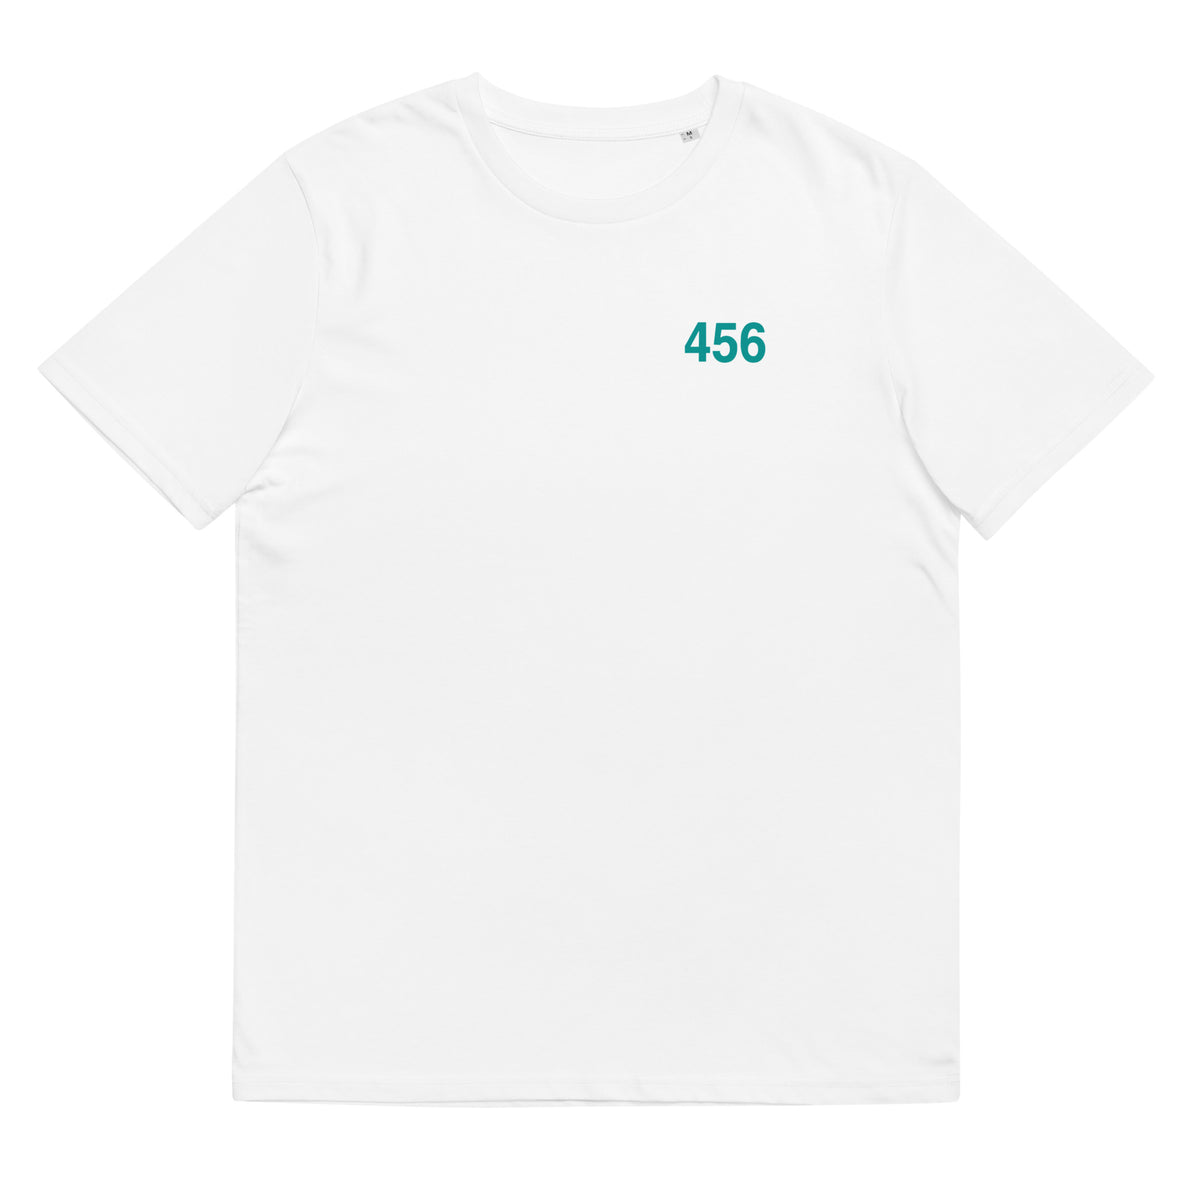 456 T-Shirt - White - Teebop